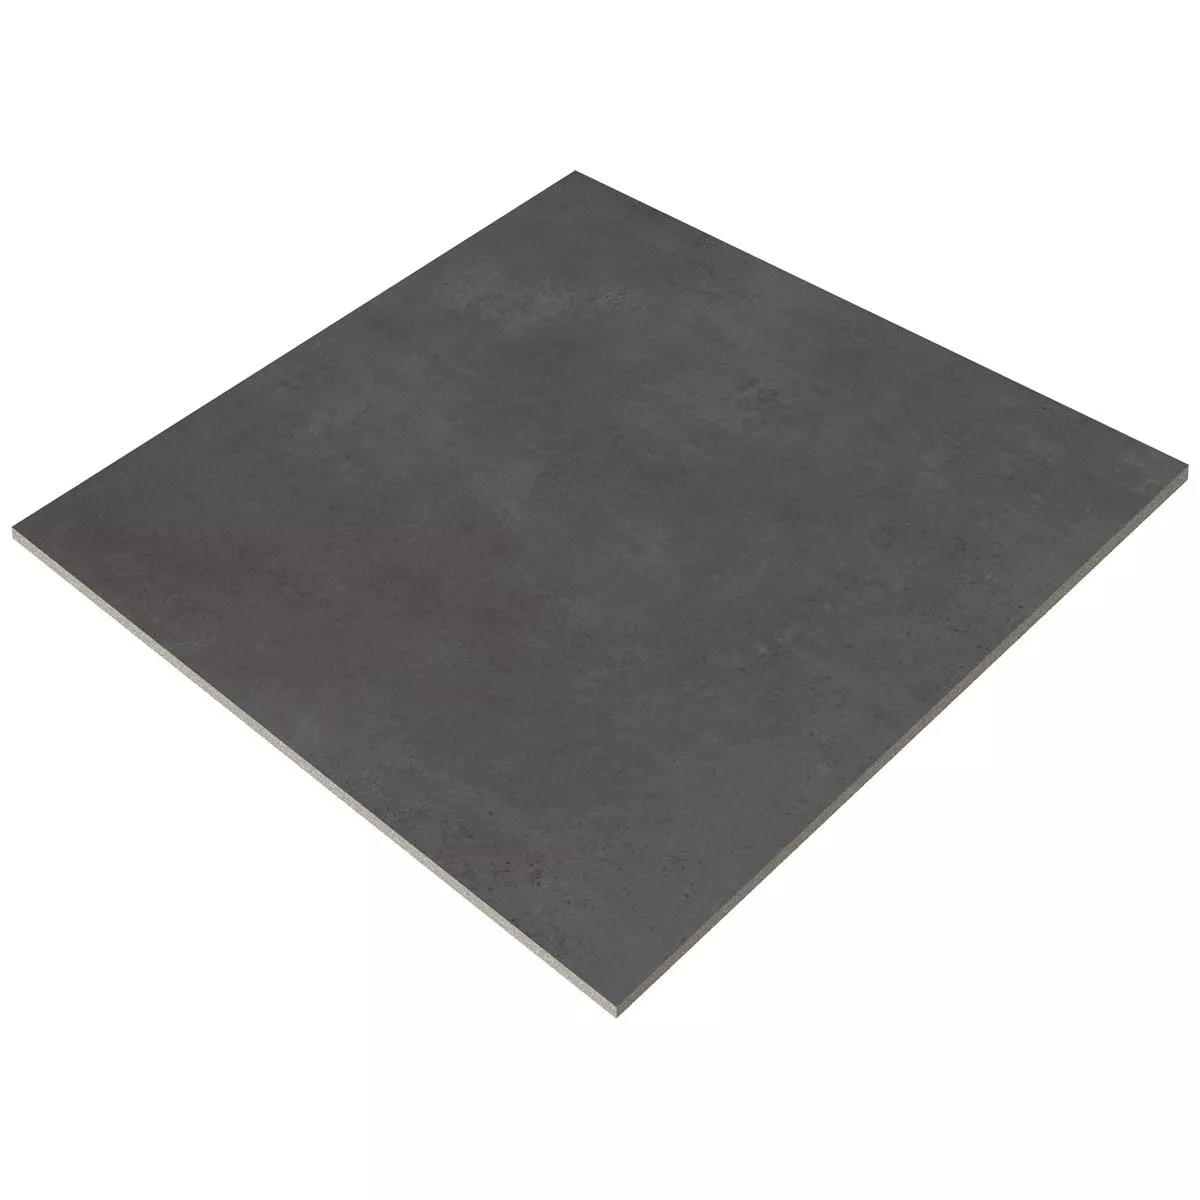 Piastrelle Assos Cemento Ottica R10/B Antracite 60x60cm